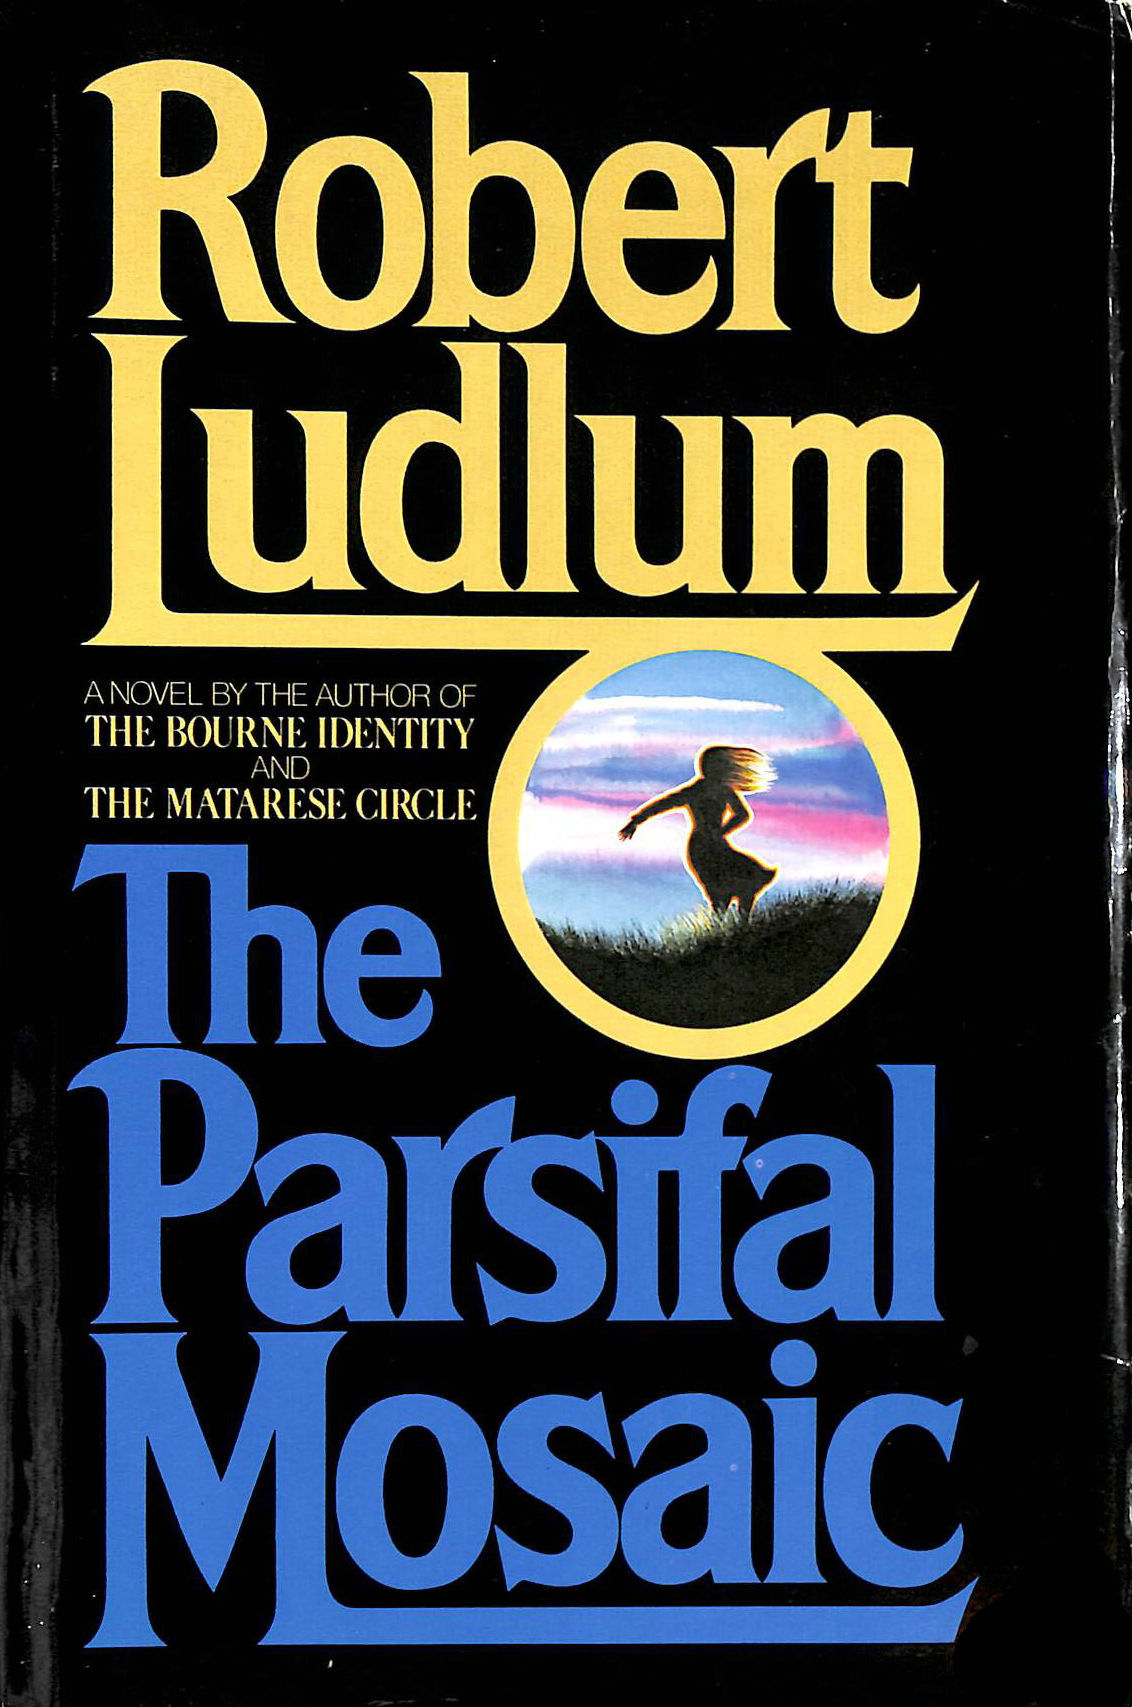 LUDLUM, ROBERT - The Parsifal Mosaic